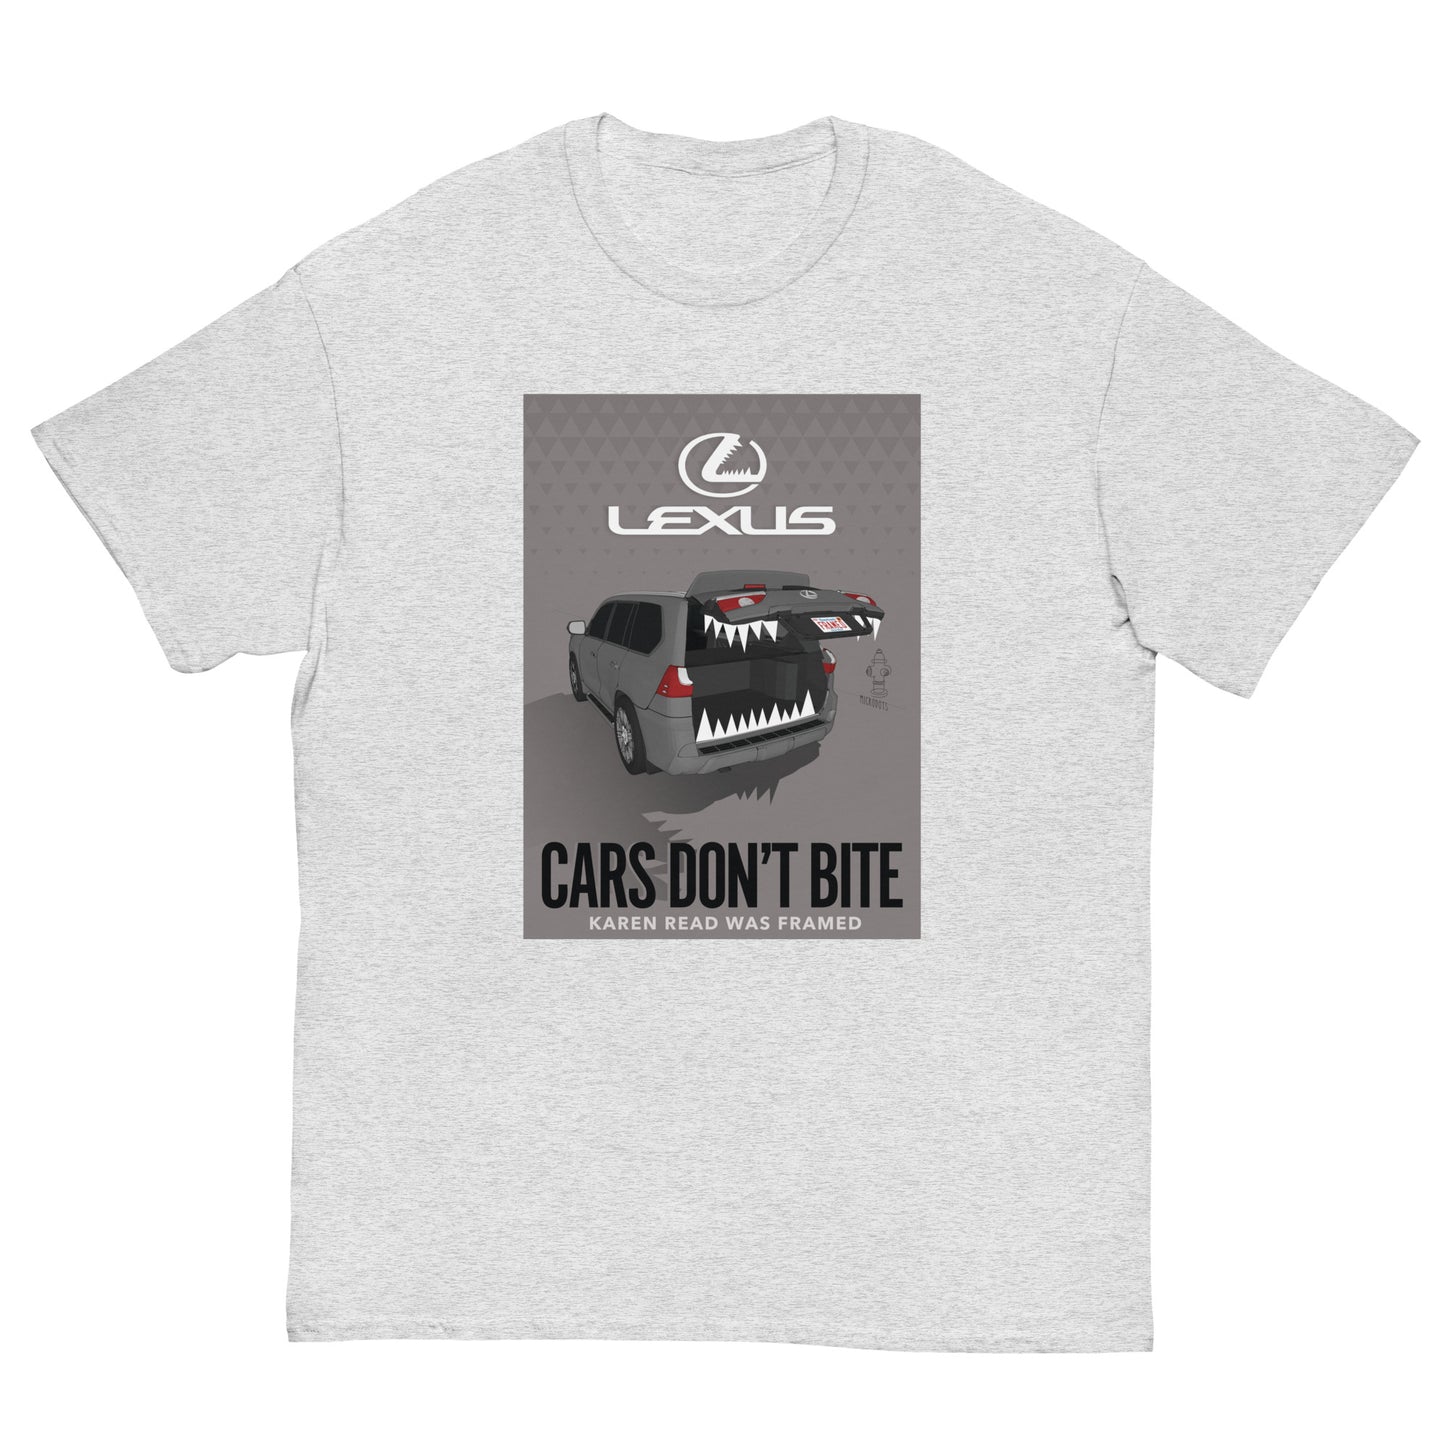 Microdots "Cars Don't Bite" Design - Classic Tee